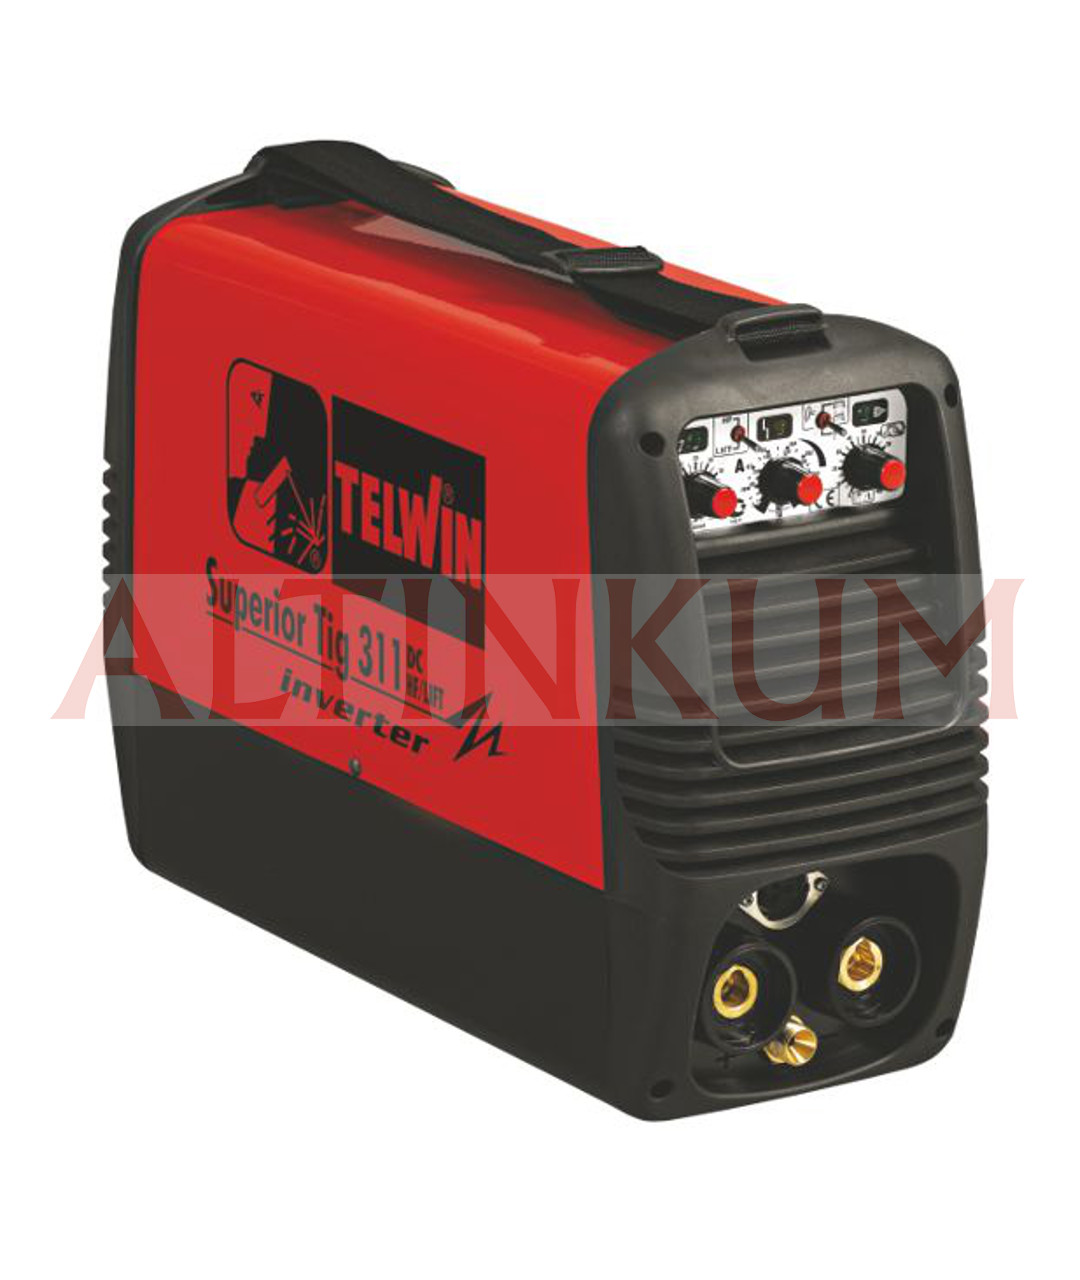 Telwin Superior Tig 311 DC HF/LIFT 280 Amper İnverter Kaynak Makinası